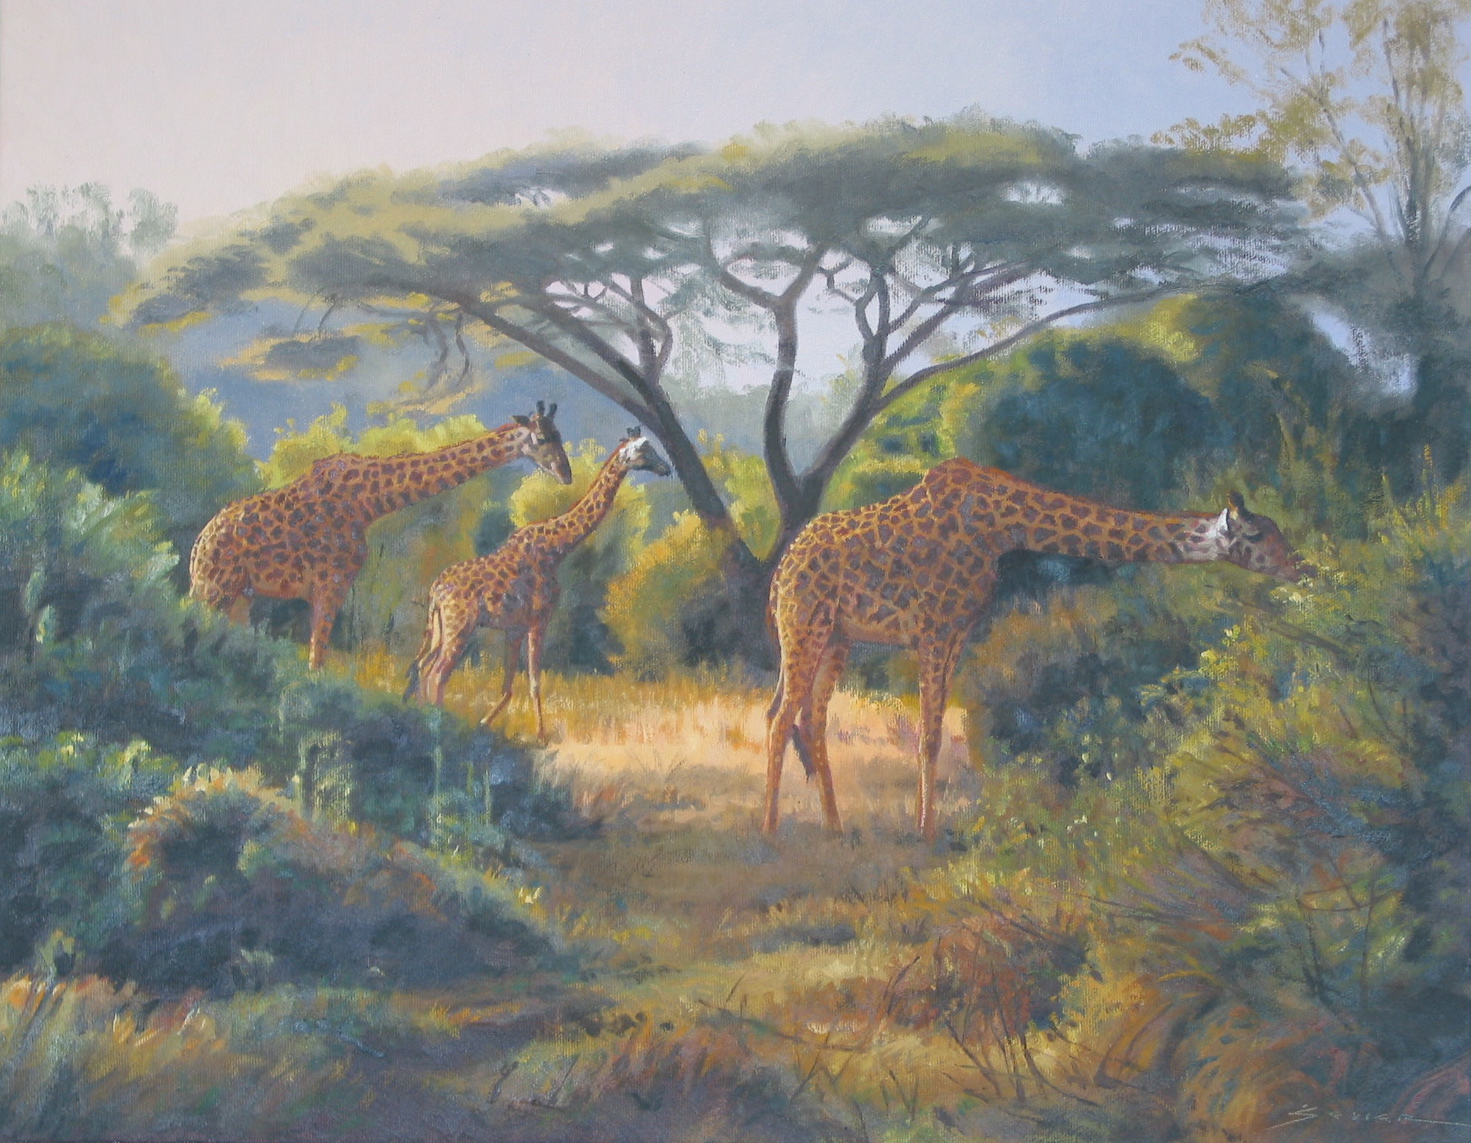  Giraffes/Masai Mara Kenya, 16 x 20, oil 